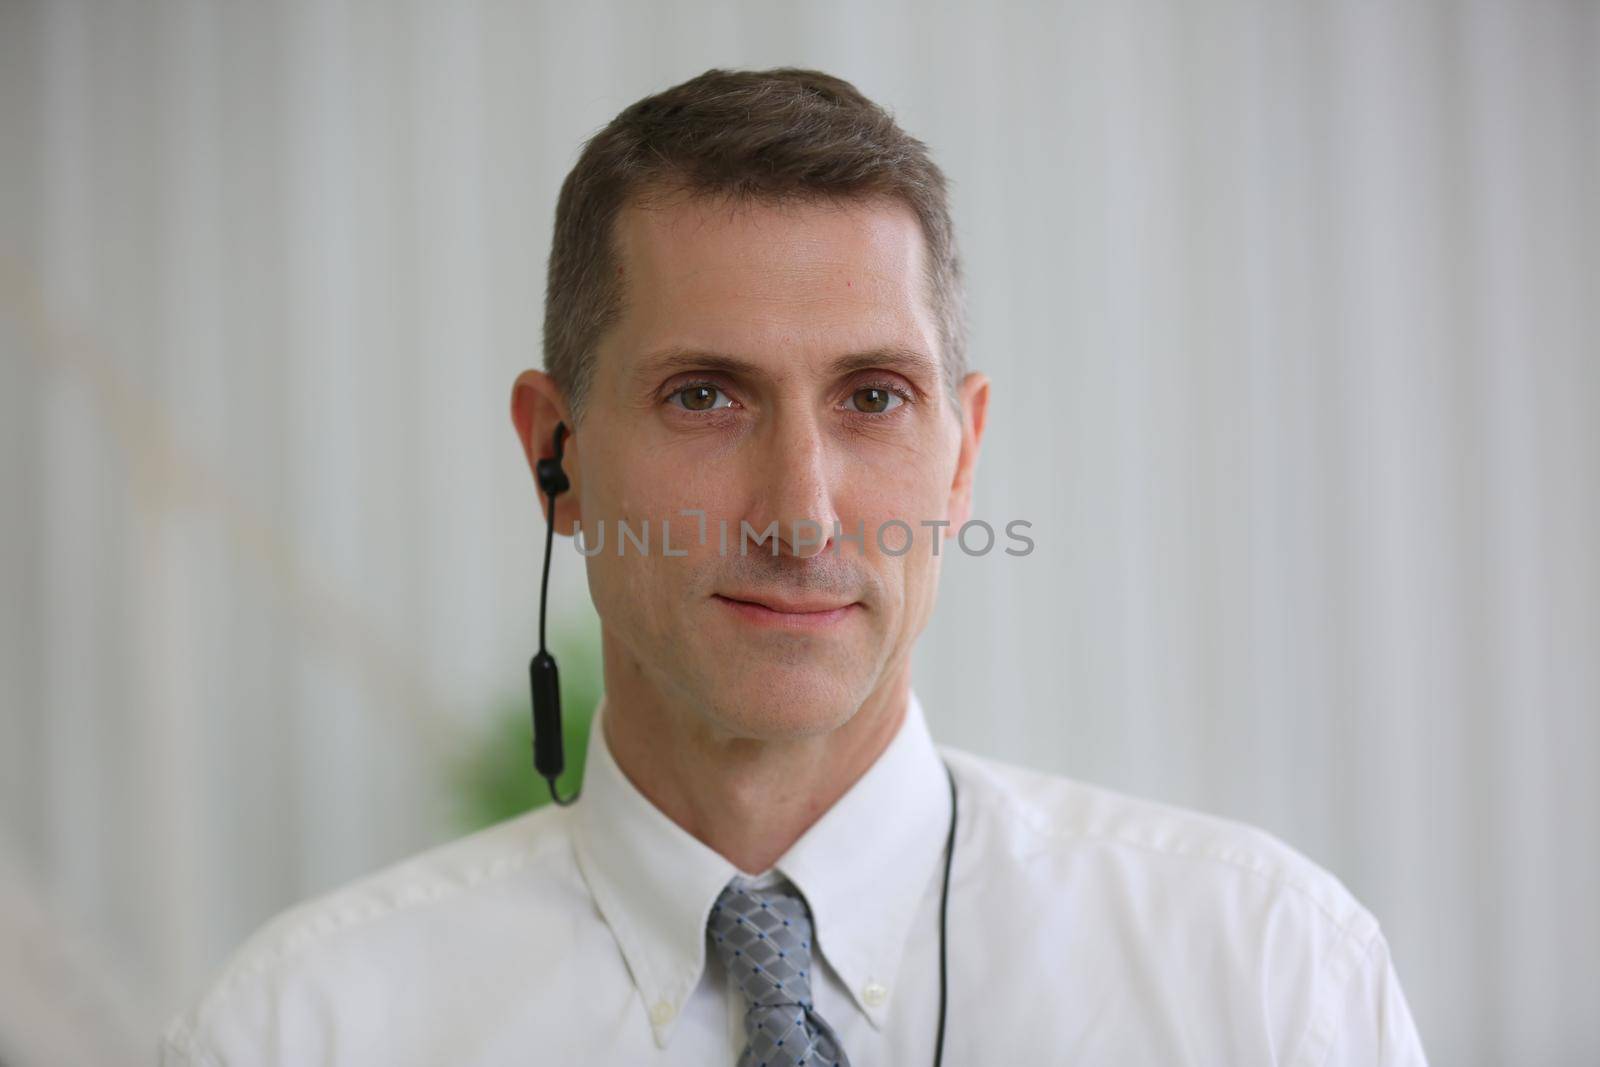  portrait of businessman with earphone